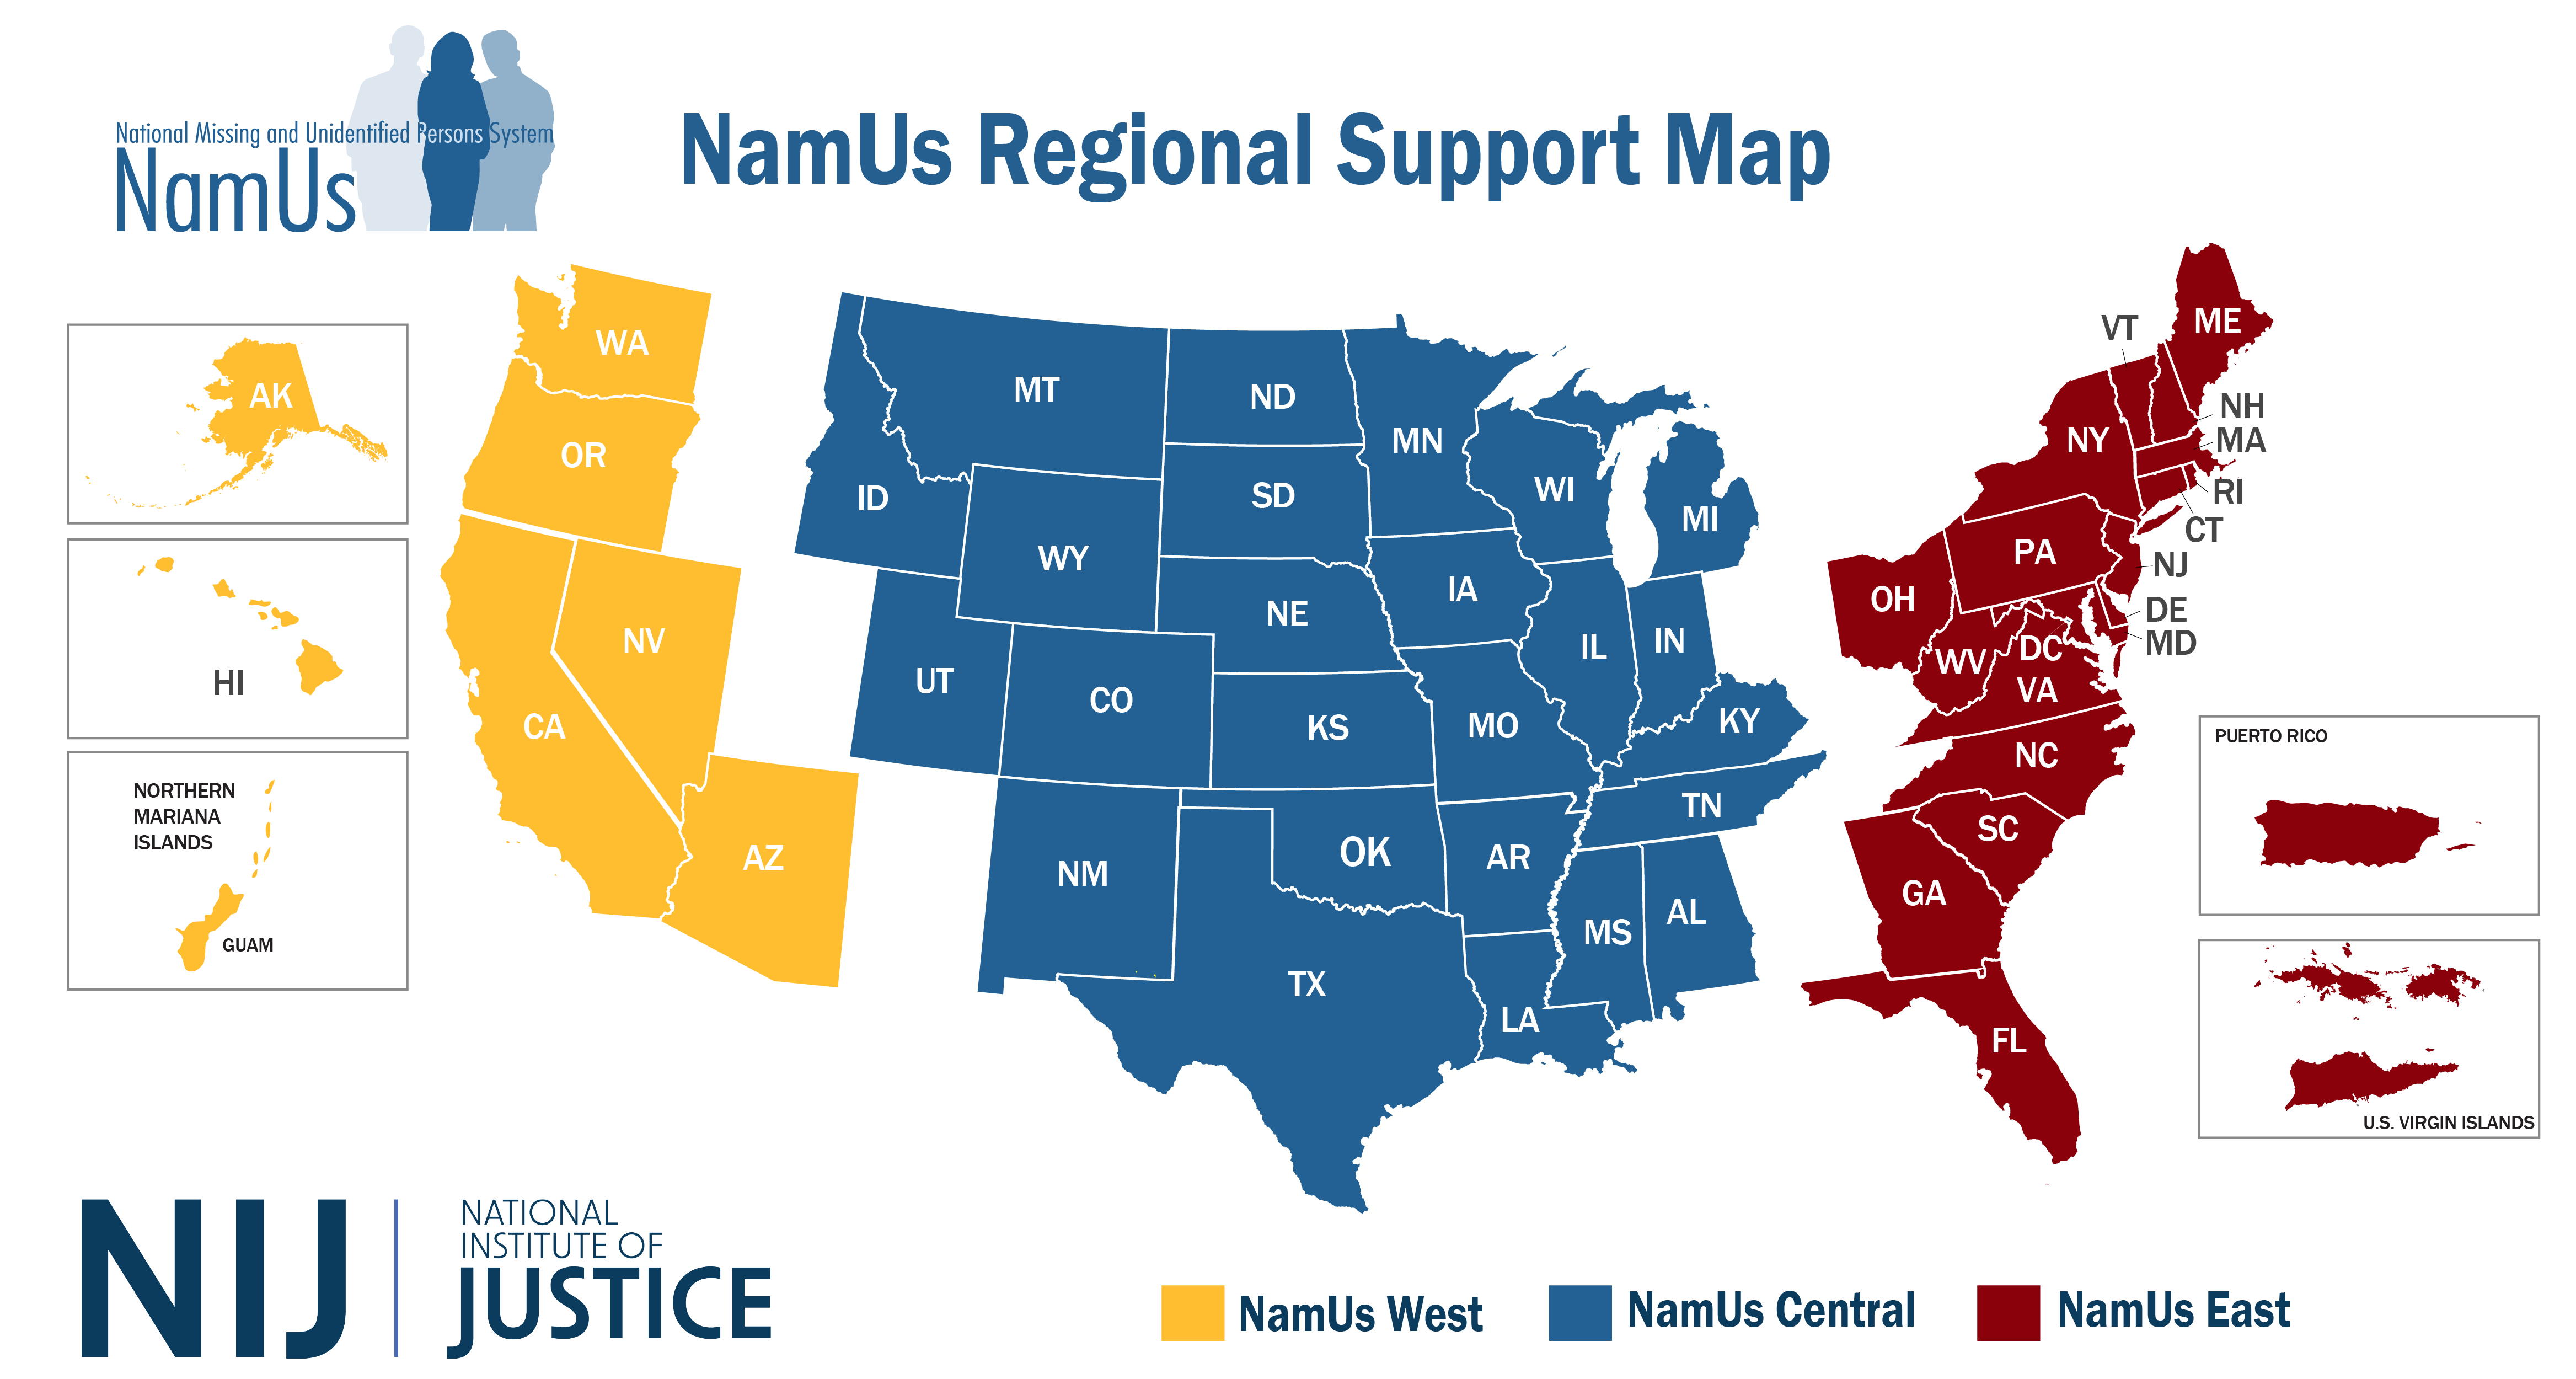 NamUs support is split between three regions - NamUs Wet, NamUs Central, and NamUs East